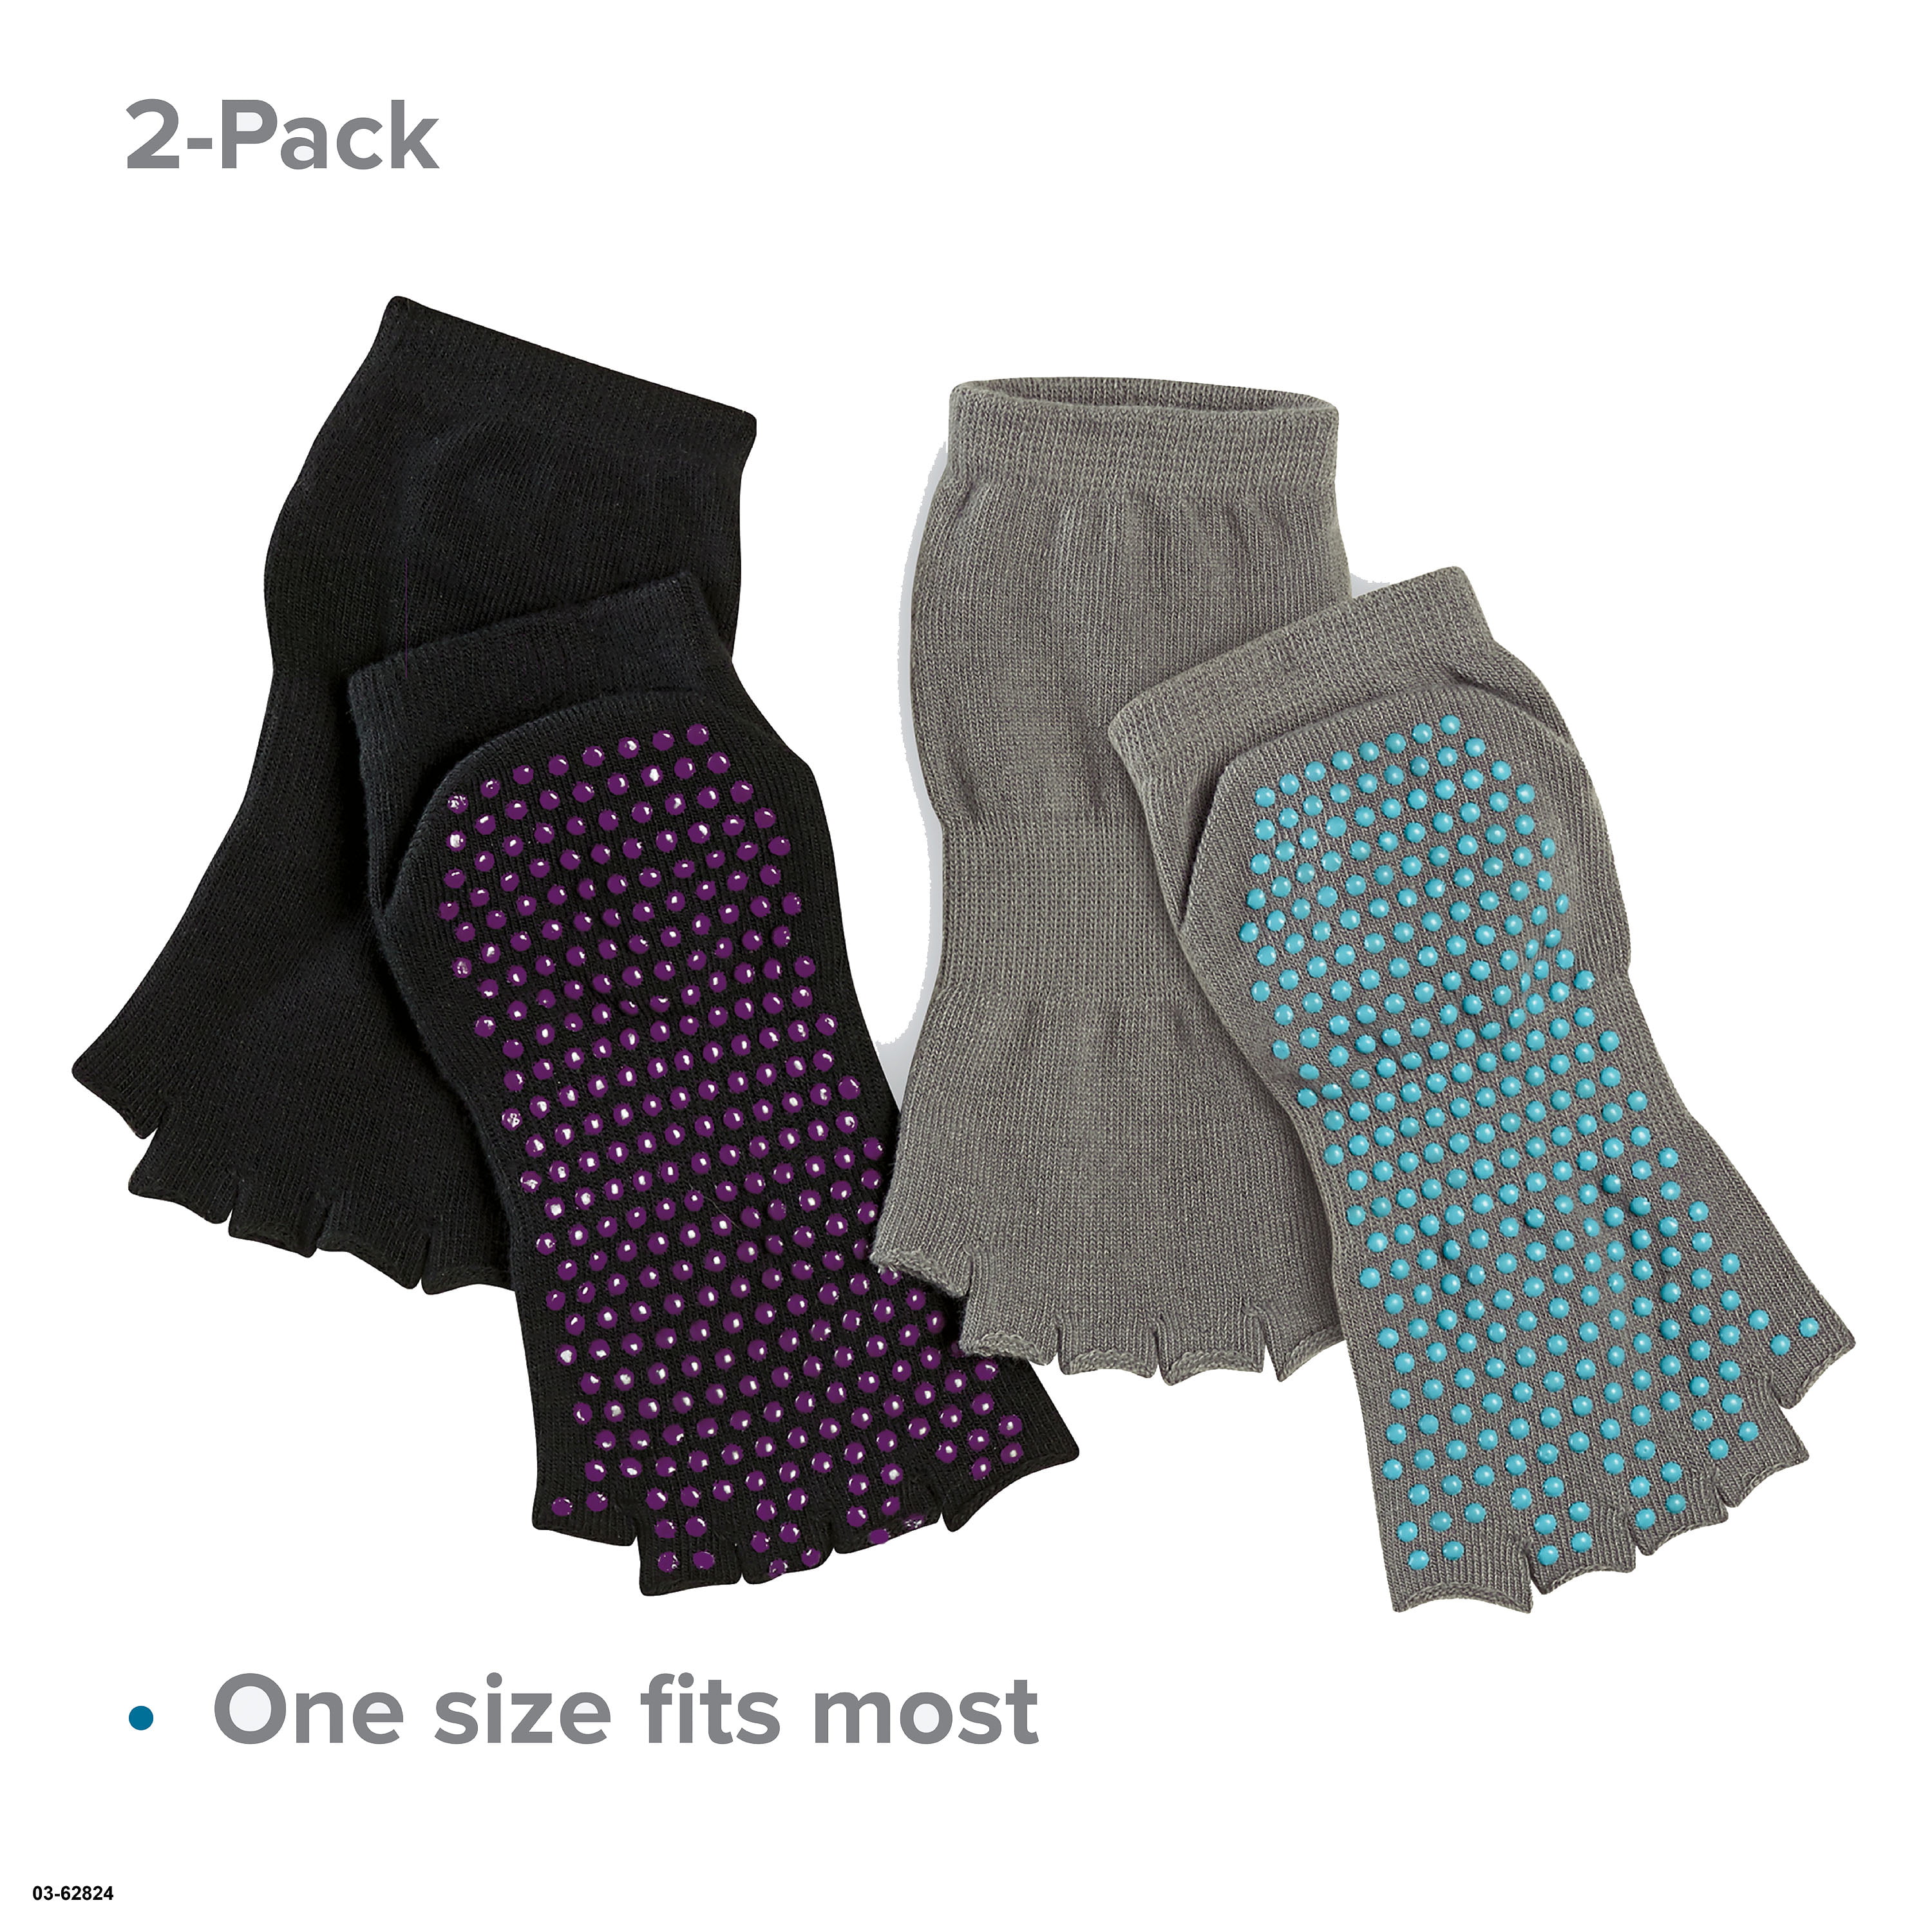 Evolve by Gaiam Toeless Grippy Yoga Socks, 2 Pack, Black and Grey, Small/Medium  